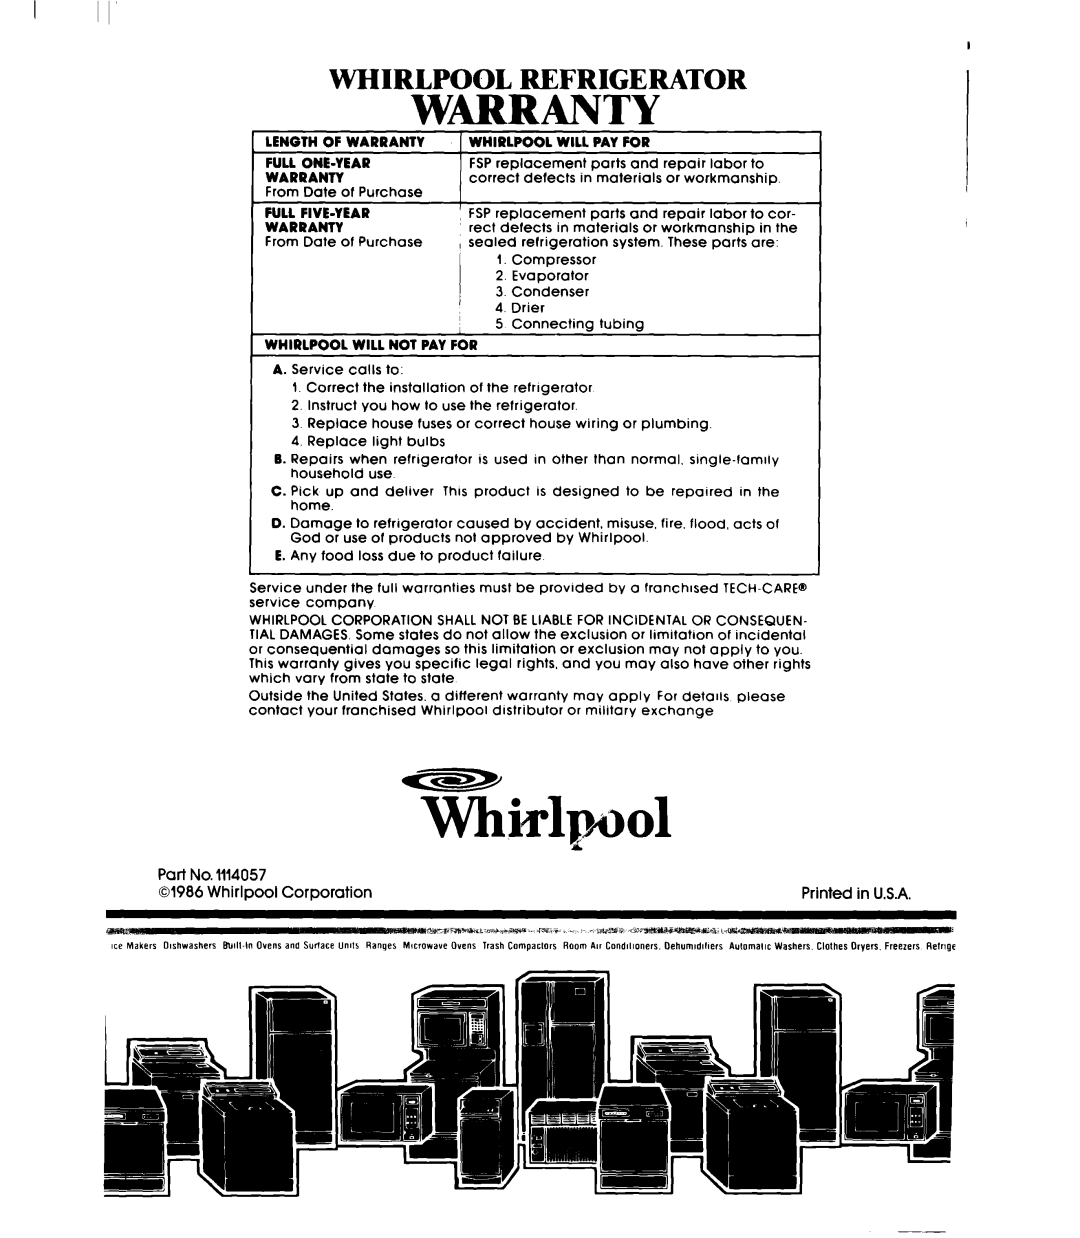 Whirlpool ED25PM manual Whirlpool Refrigerator, Whirlpool Corporation, WmRANTY 